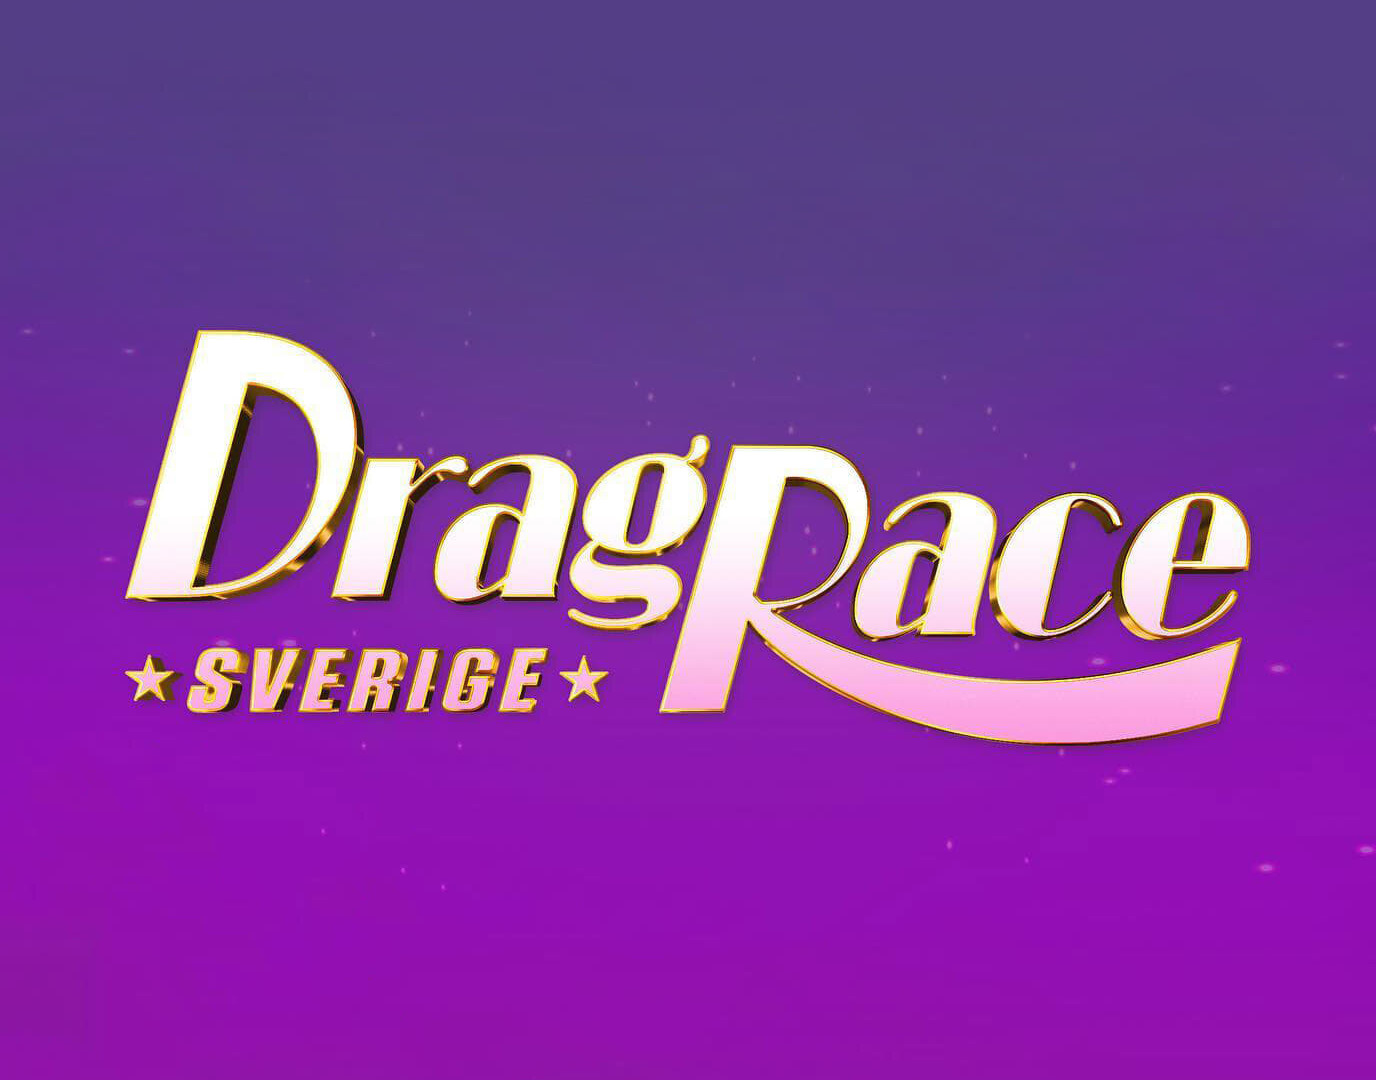 Show Drag Race Sverige